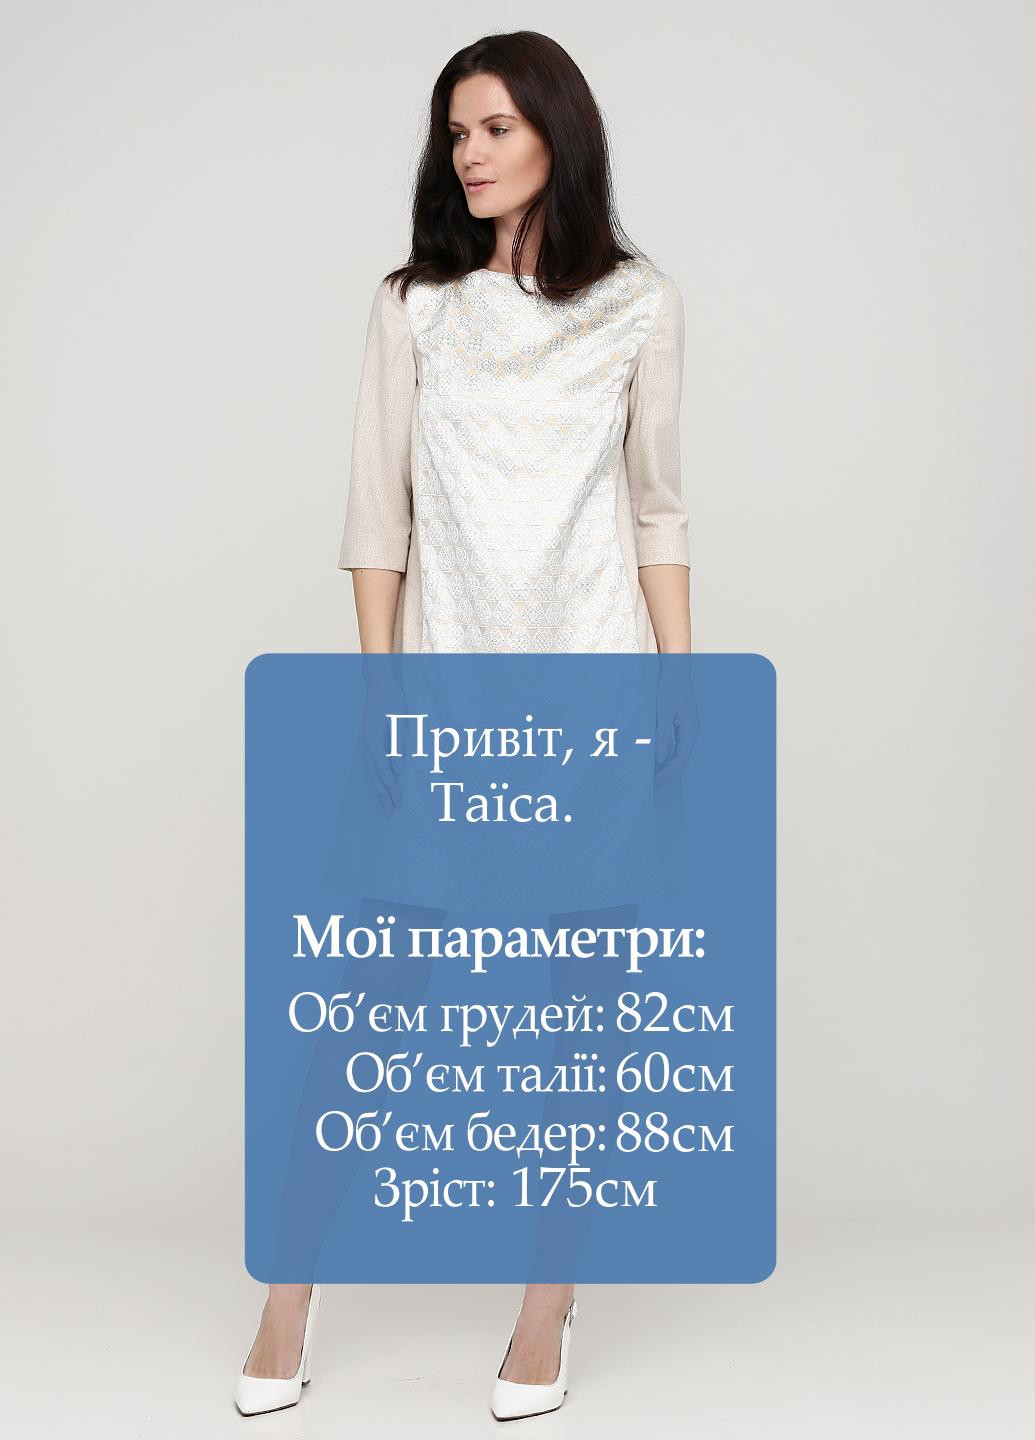 Бежевое деловое платье а-силуэт Anastasia Ivanova for PUBLIC&PRIVATE с абстрактным узором